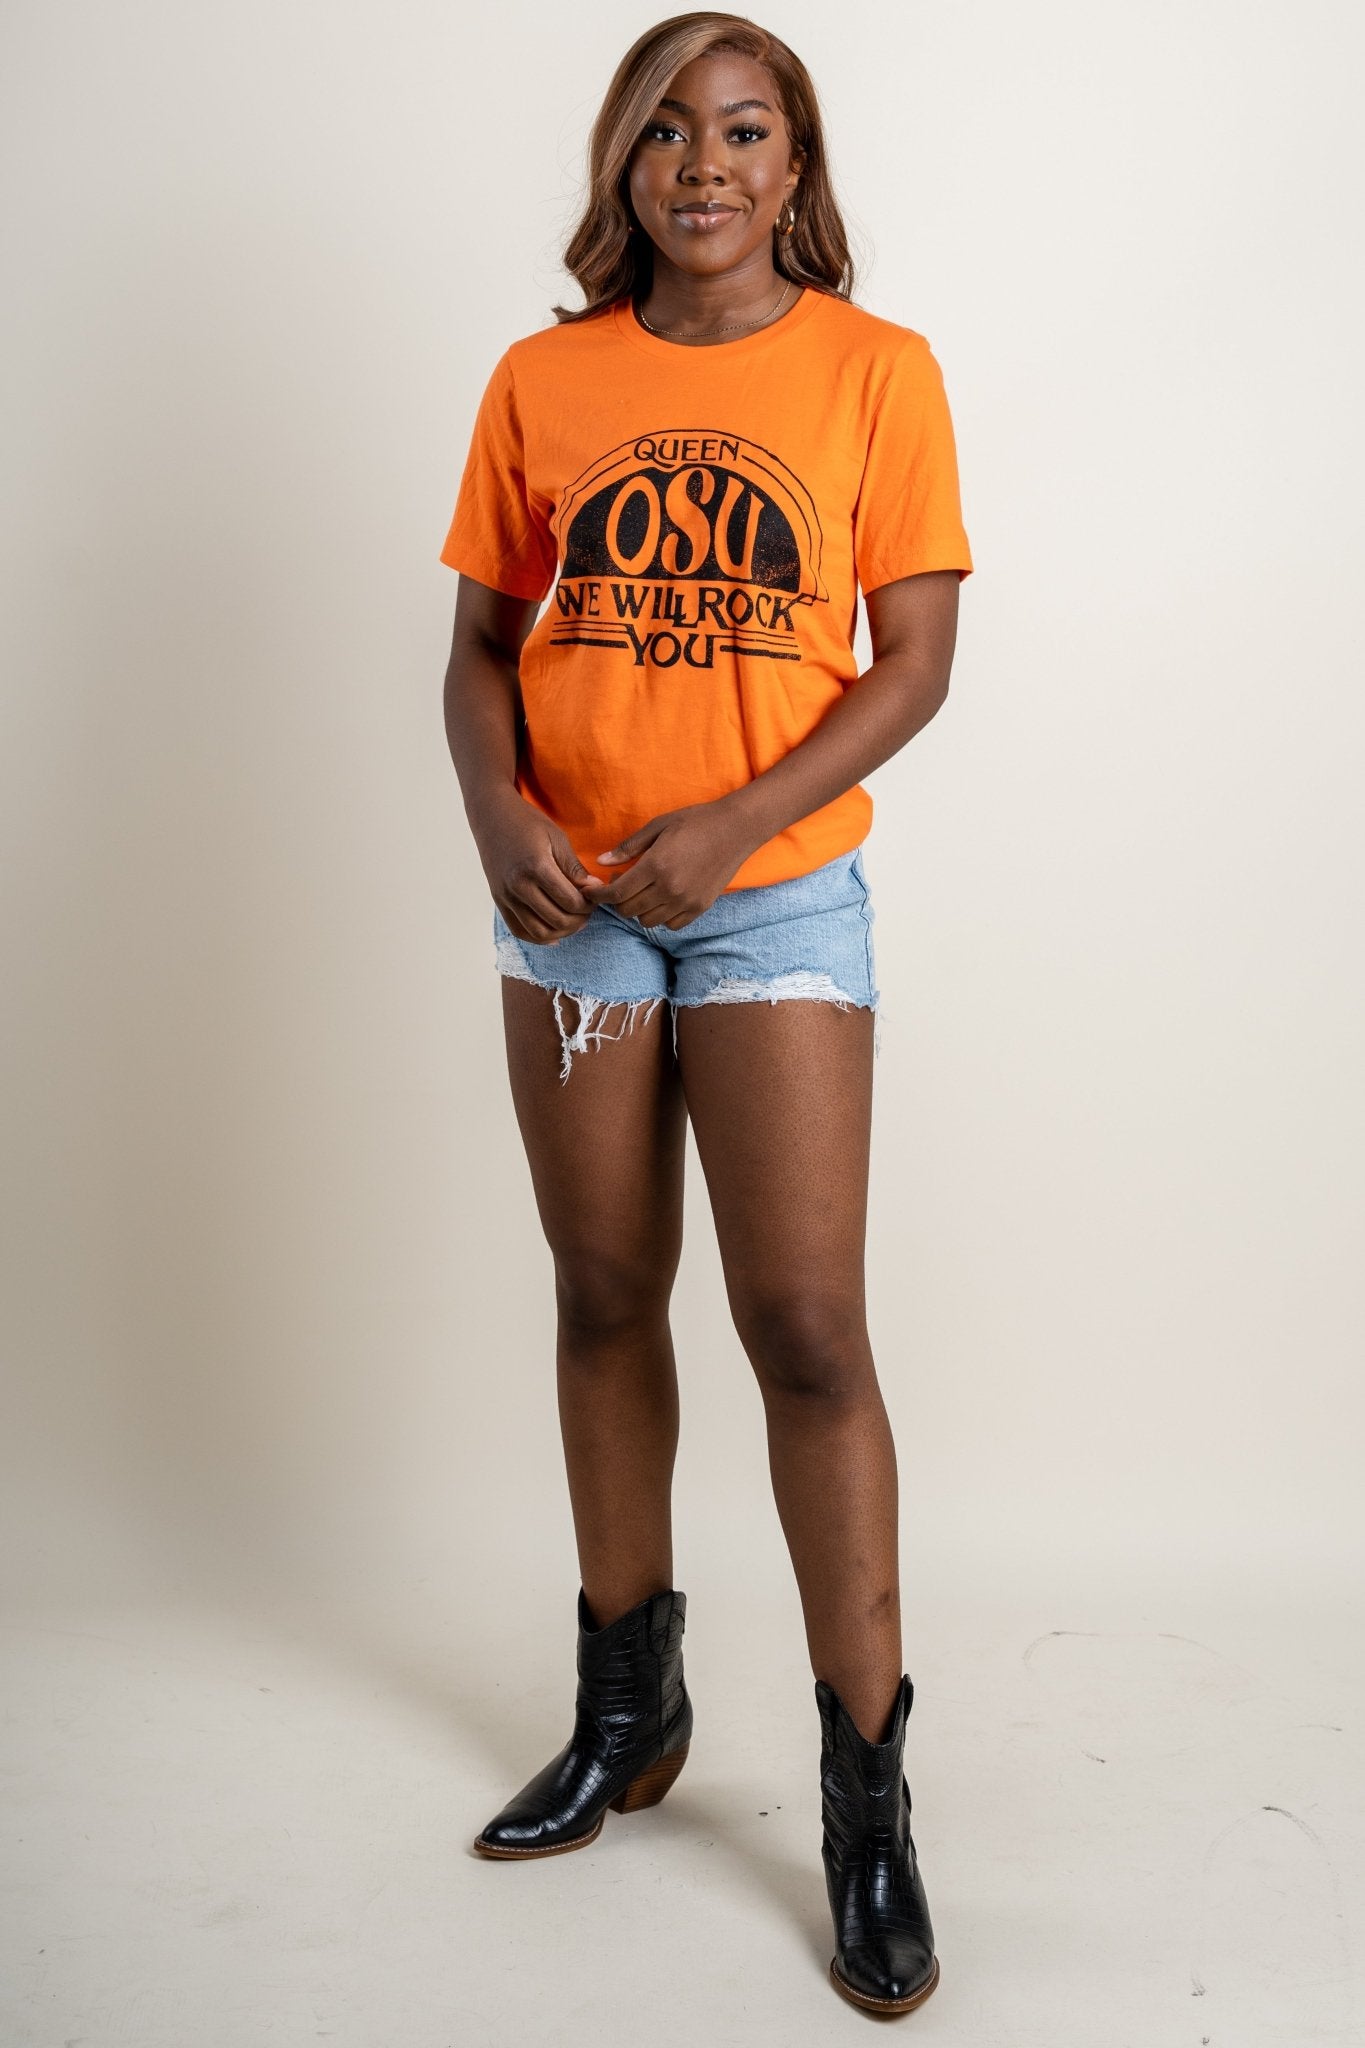 OSU OSU Queen we will rock you unisex t-shirt orange T-shirts | Lush Fashion Lounge Trendy Oklahoma State Cowboys Apparel & Cute Gameday T-Shirts